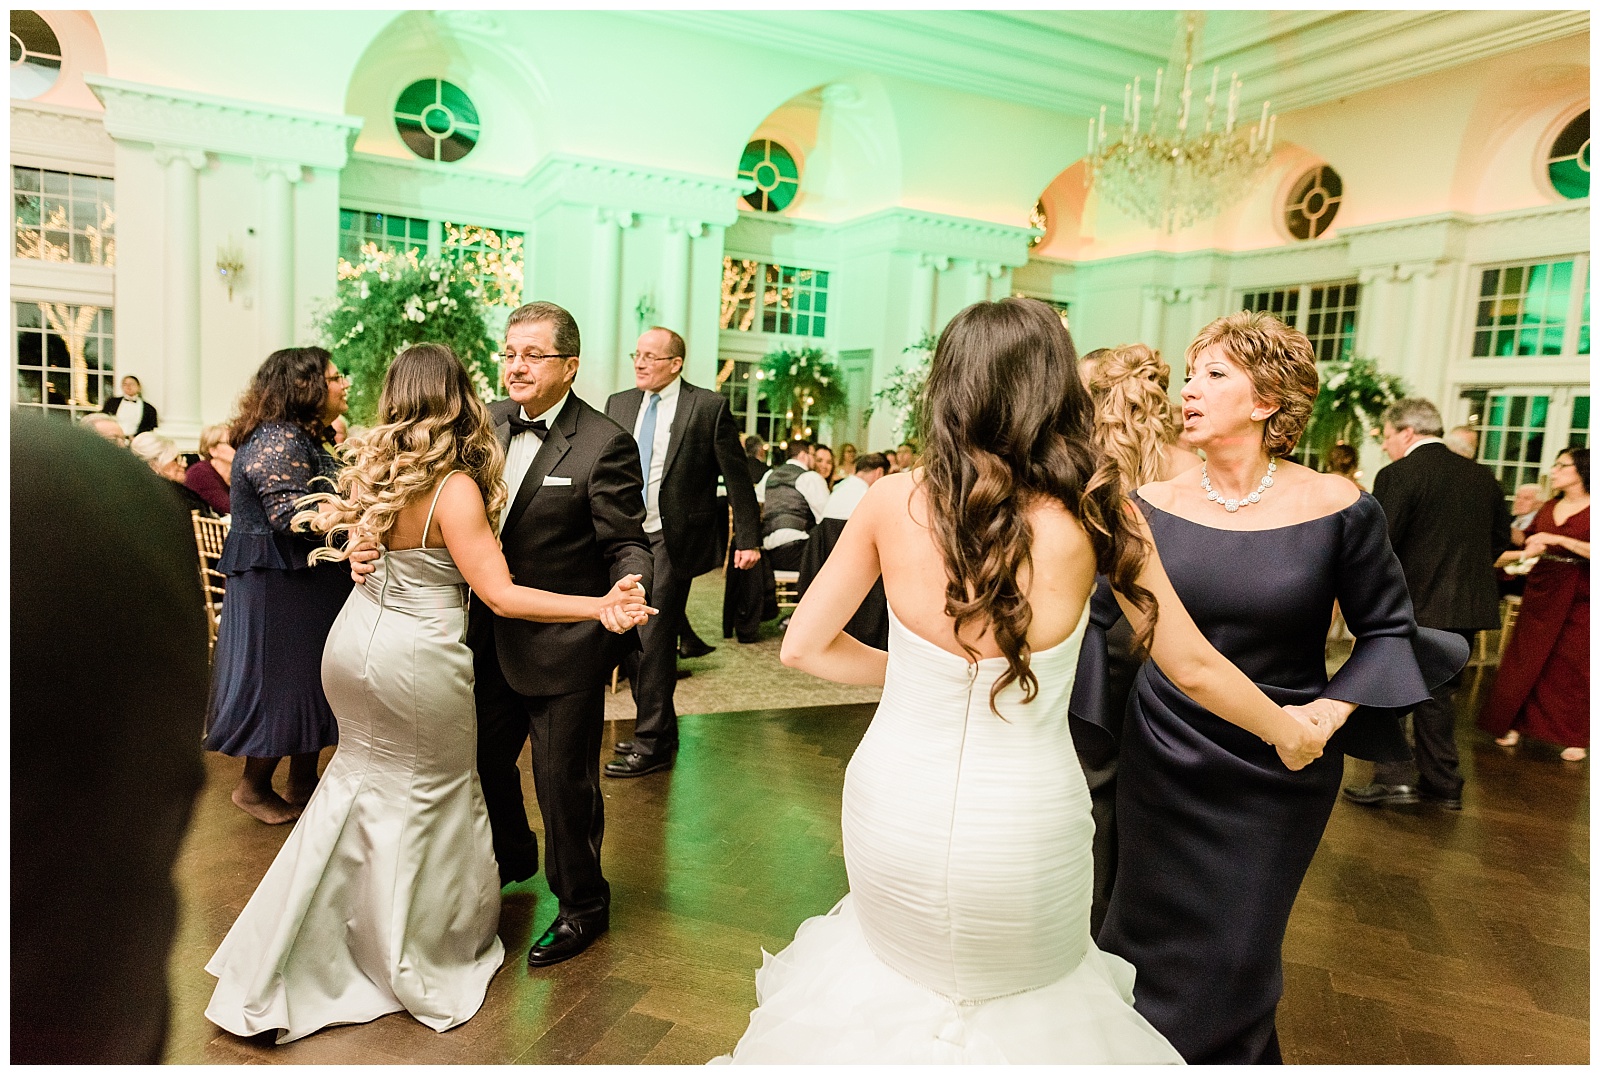 Park Chateau Wedding, Photographer, New Jersey, NJ, Winter, Reception, Ballroom, Dancing, Celebration, Dance Floor, DJ, Parents